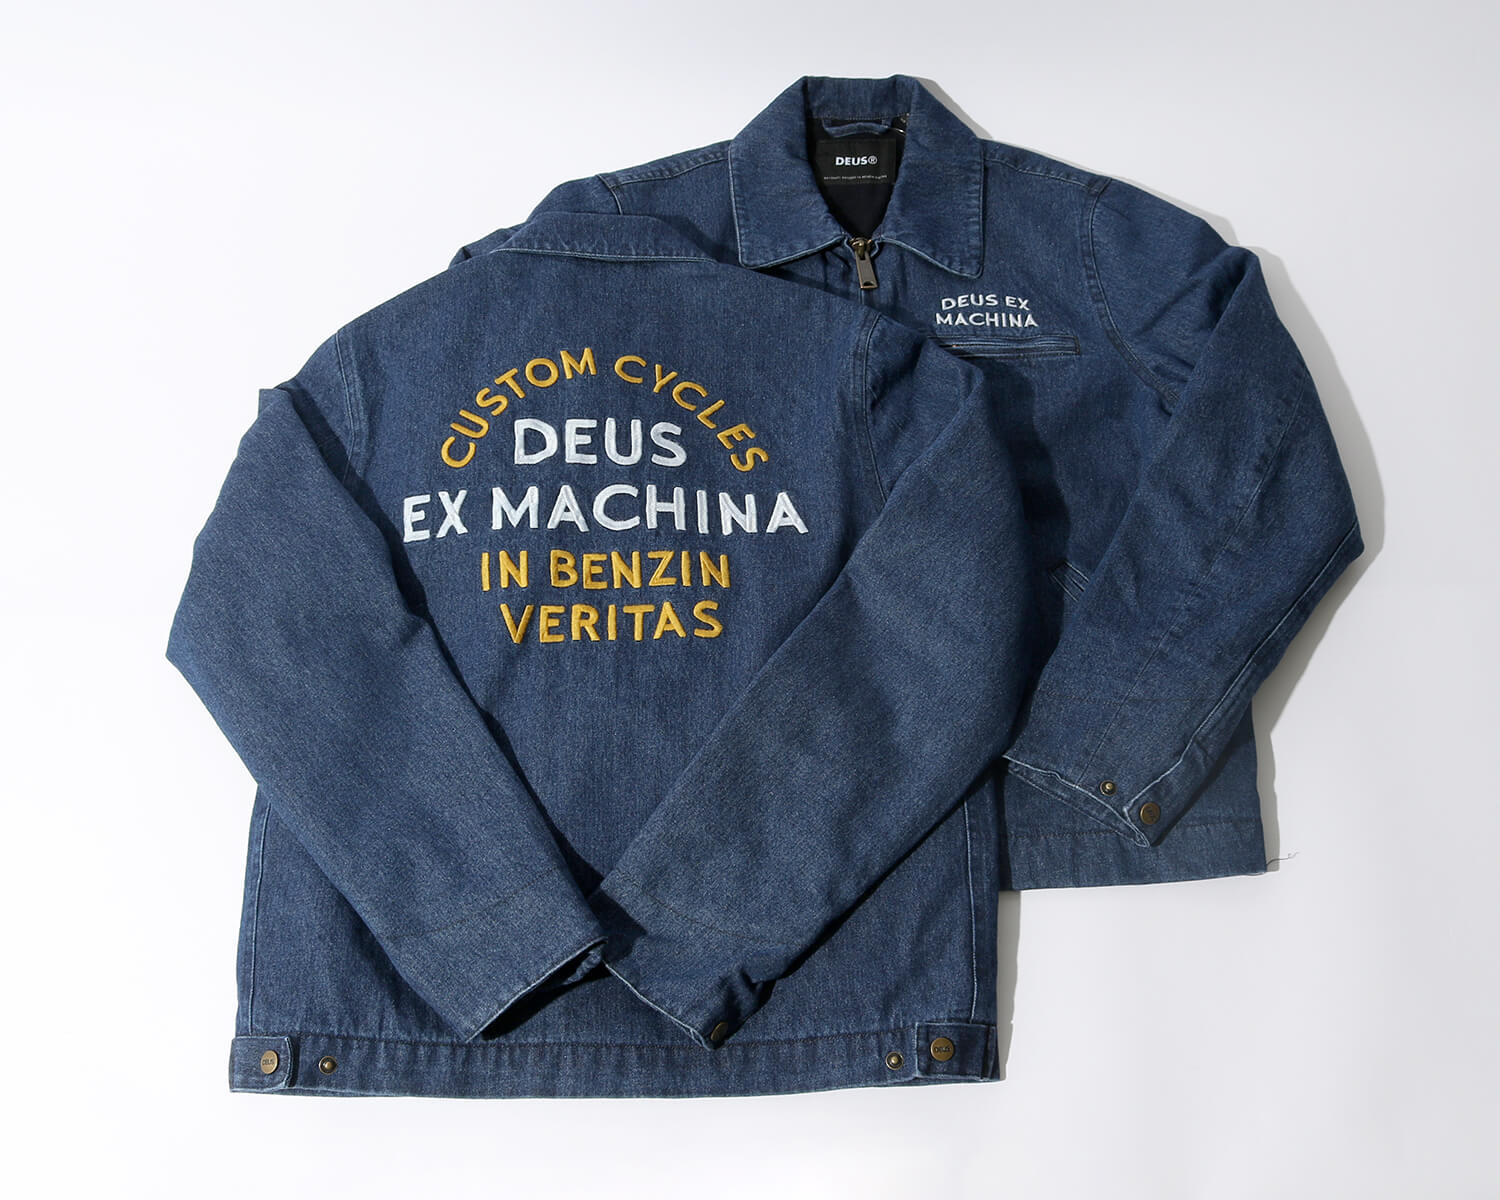 DEUS EX MACHINA(デウス エクス マキナ)のデニムジャケットです。